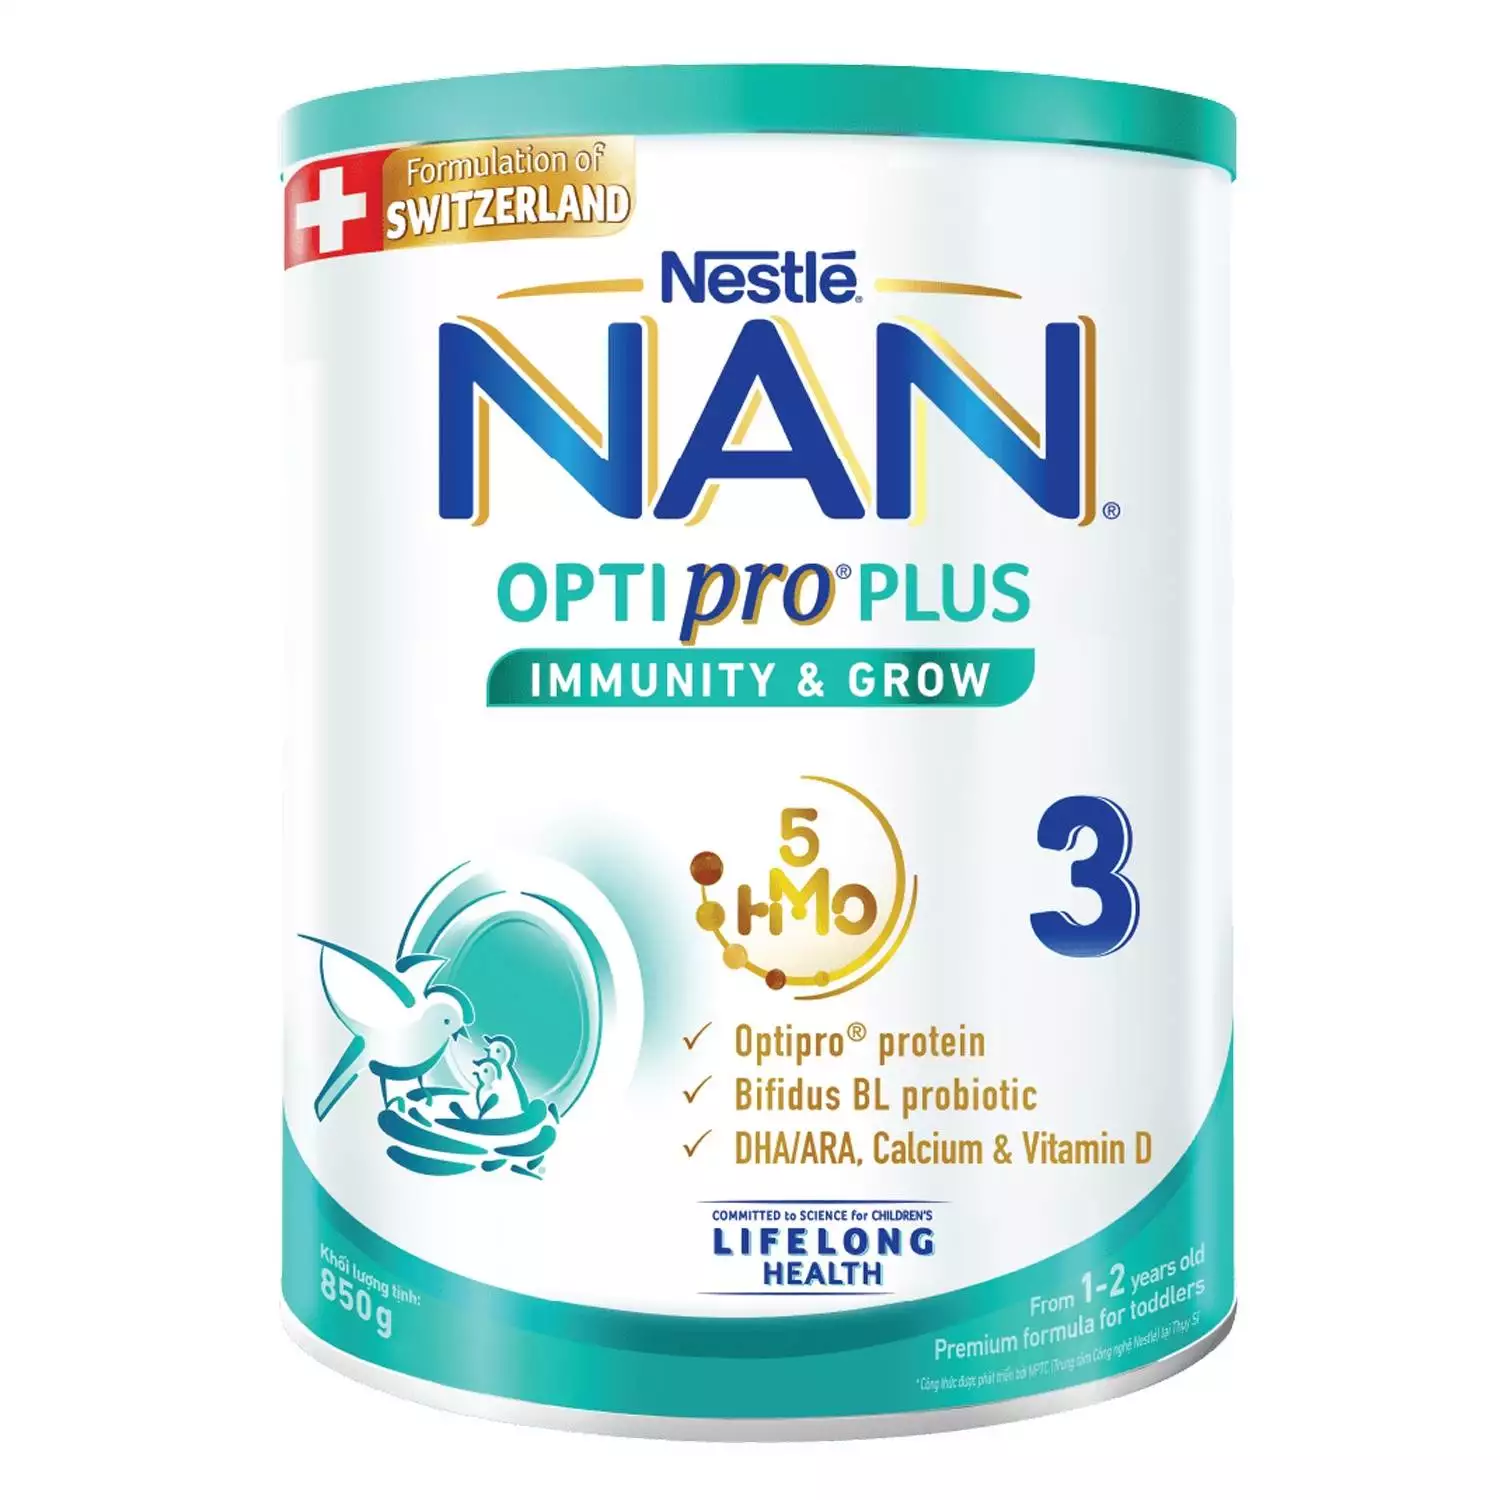 Sua Nan Optipro Plus 5Hmo So 3 850G Cho Be 1 2 Tuoi 1 Sữa Bột Nestlé Nan Optipro Plus 3 850G Với 5Hmo